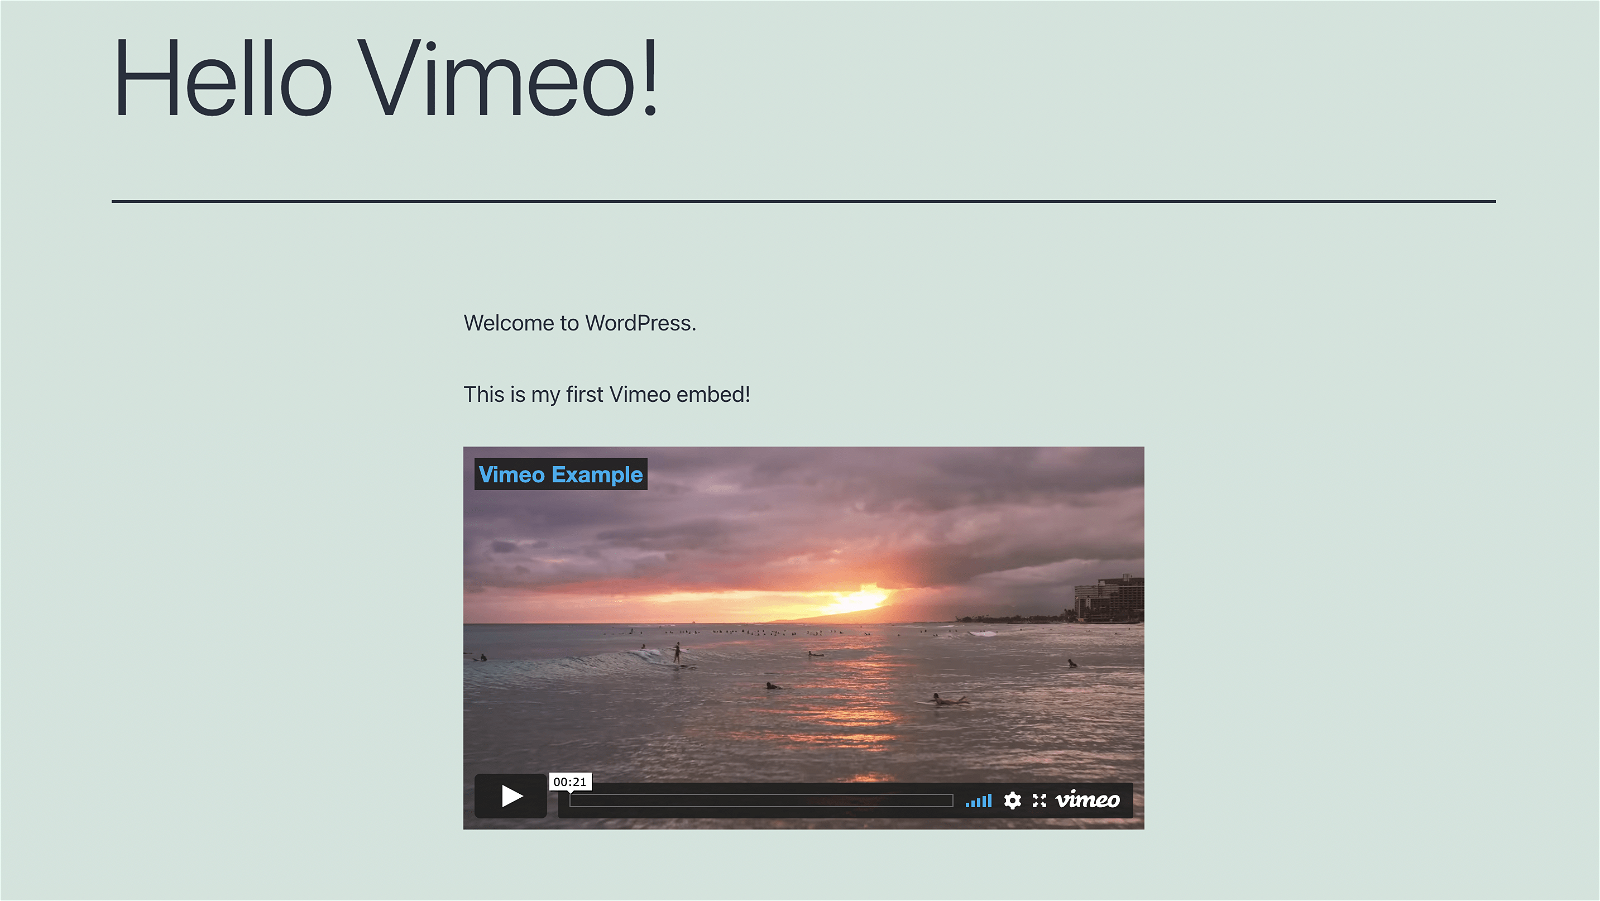 Vimeo video uploaded to WordPress